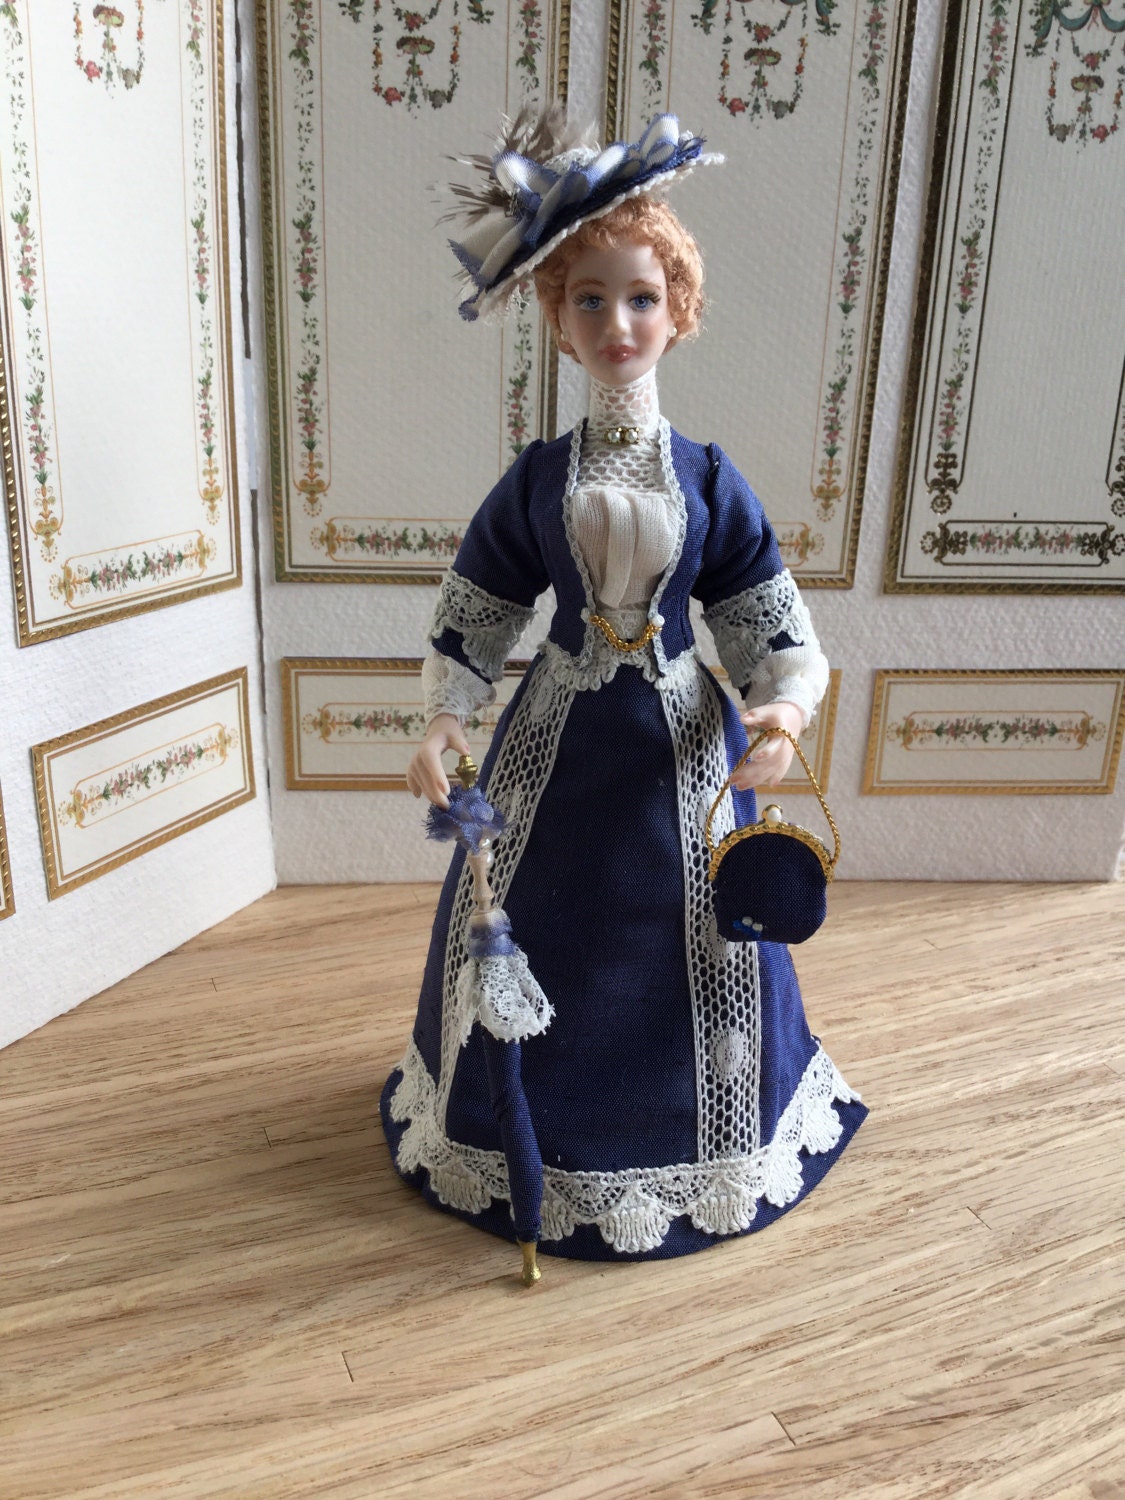 1 12 Scale Miniature Porcelain Doll 1 12 Scale Dollhouse